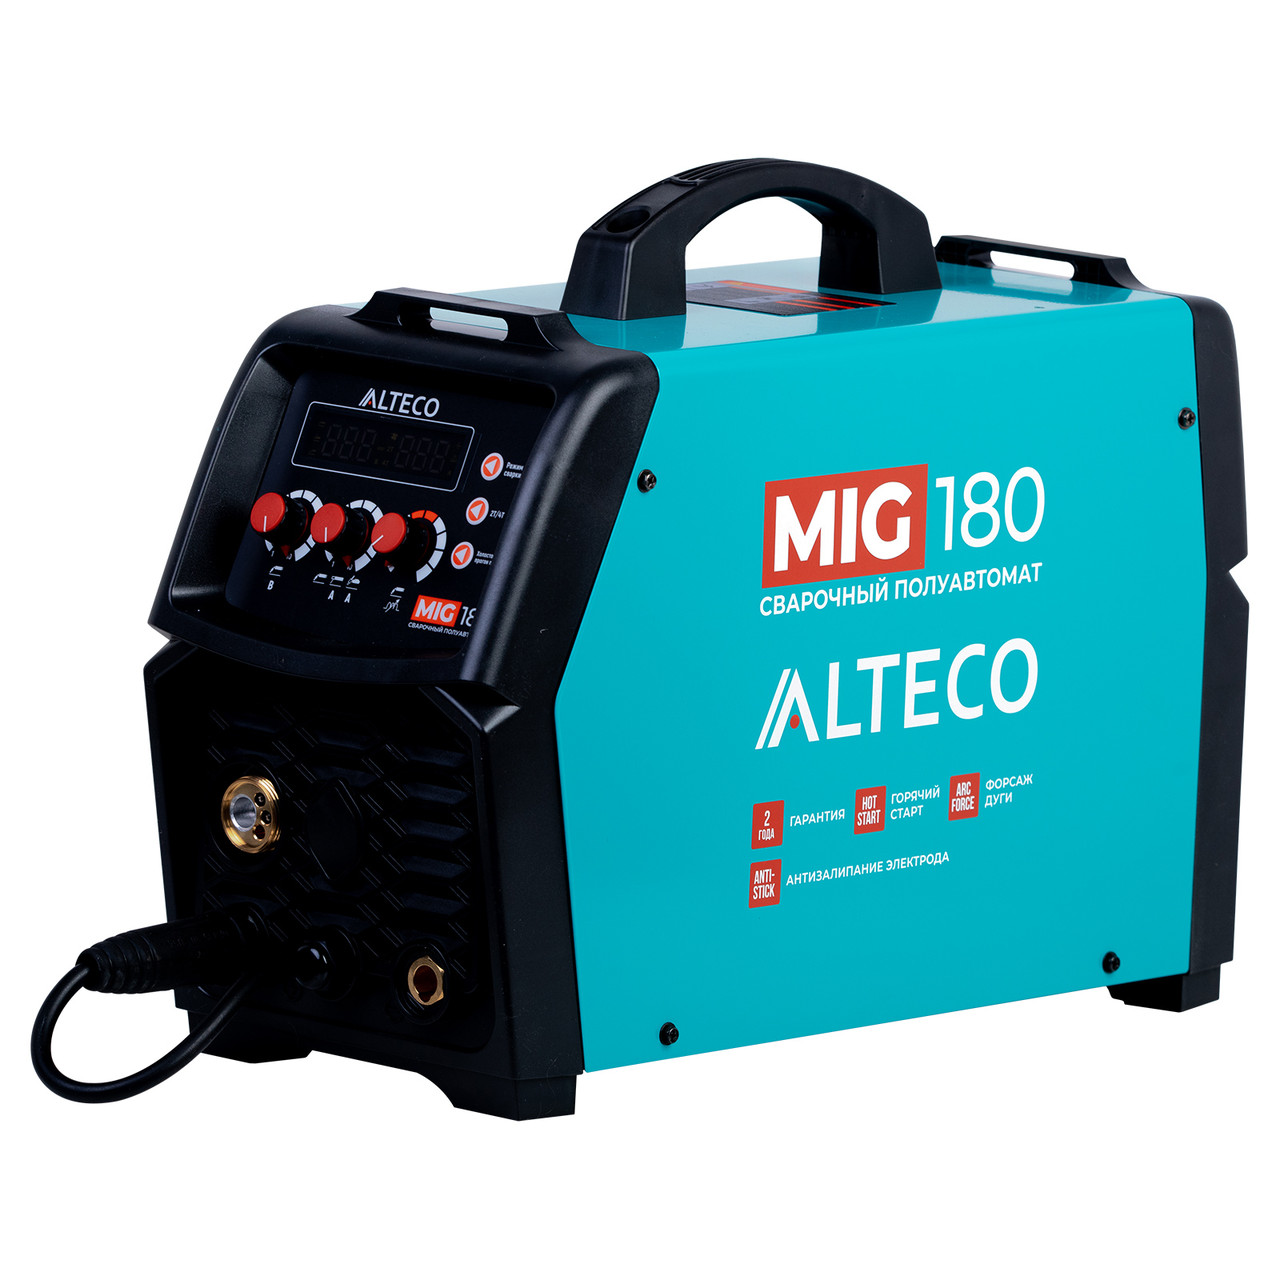 Cварочный аппарат полуавтомат ALTECO MIG 180 40444 (От 50 до 200 А)